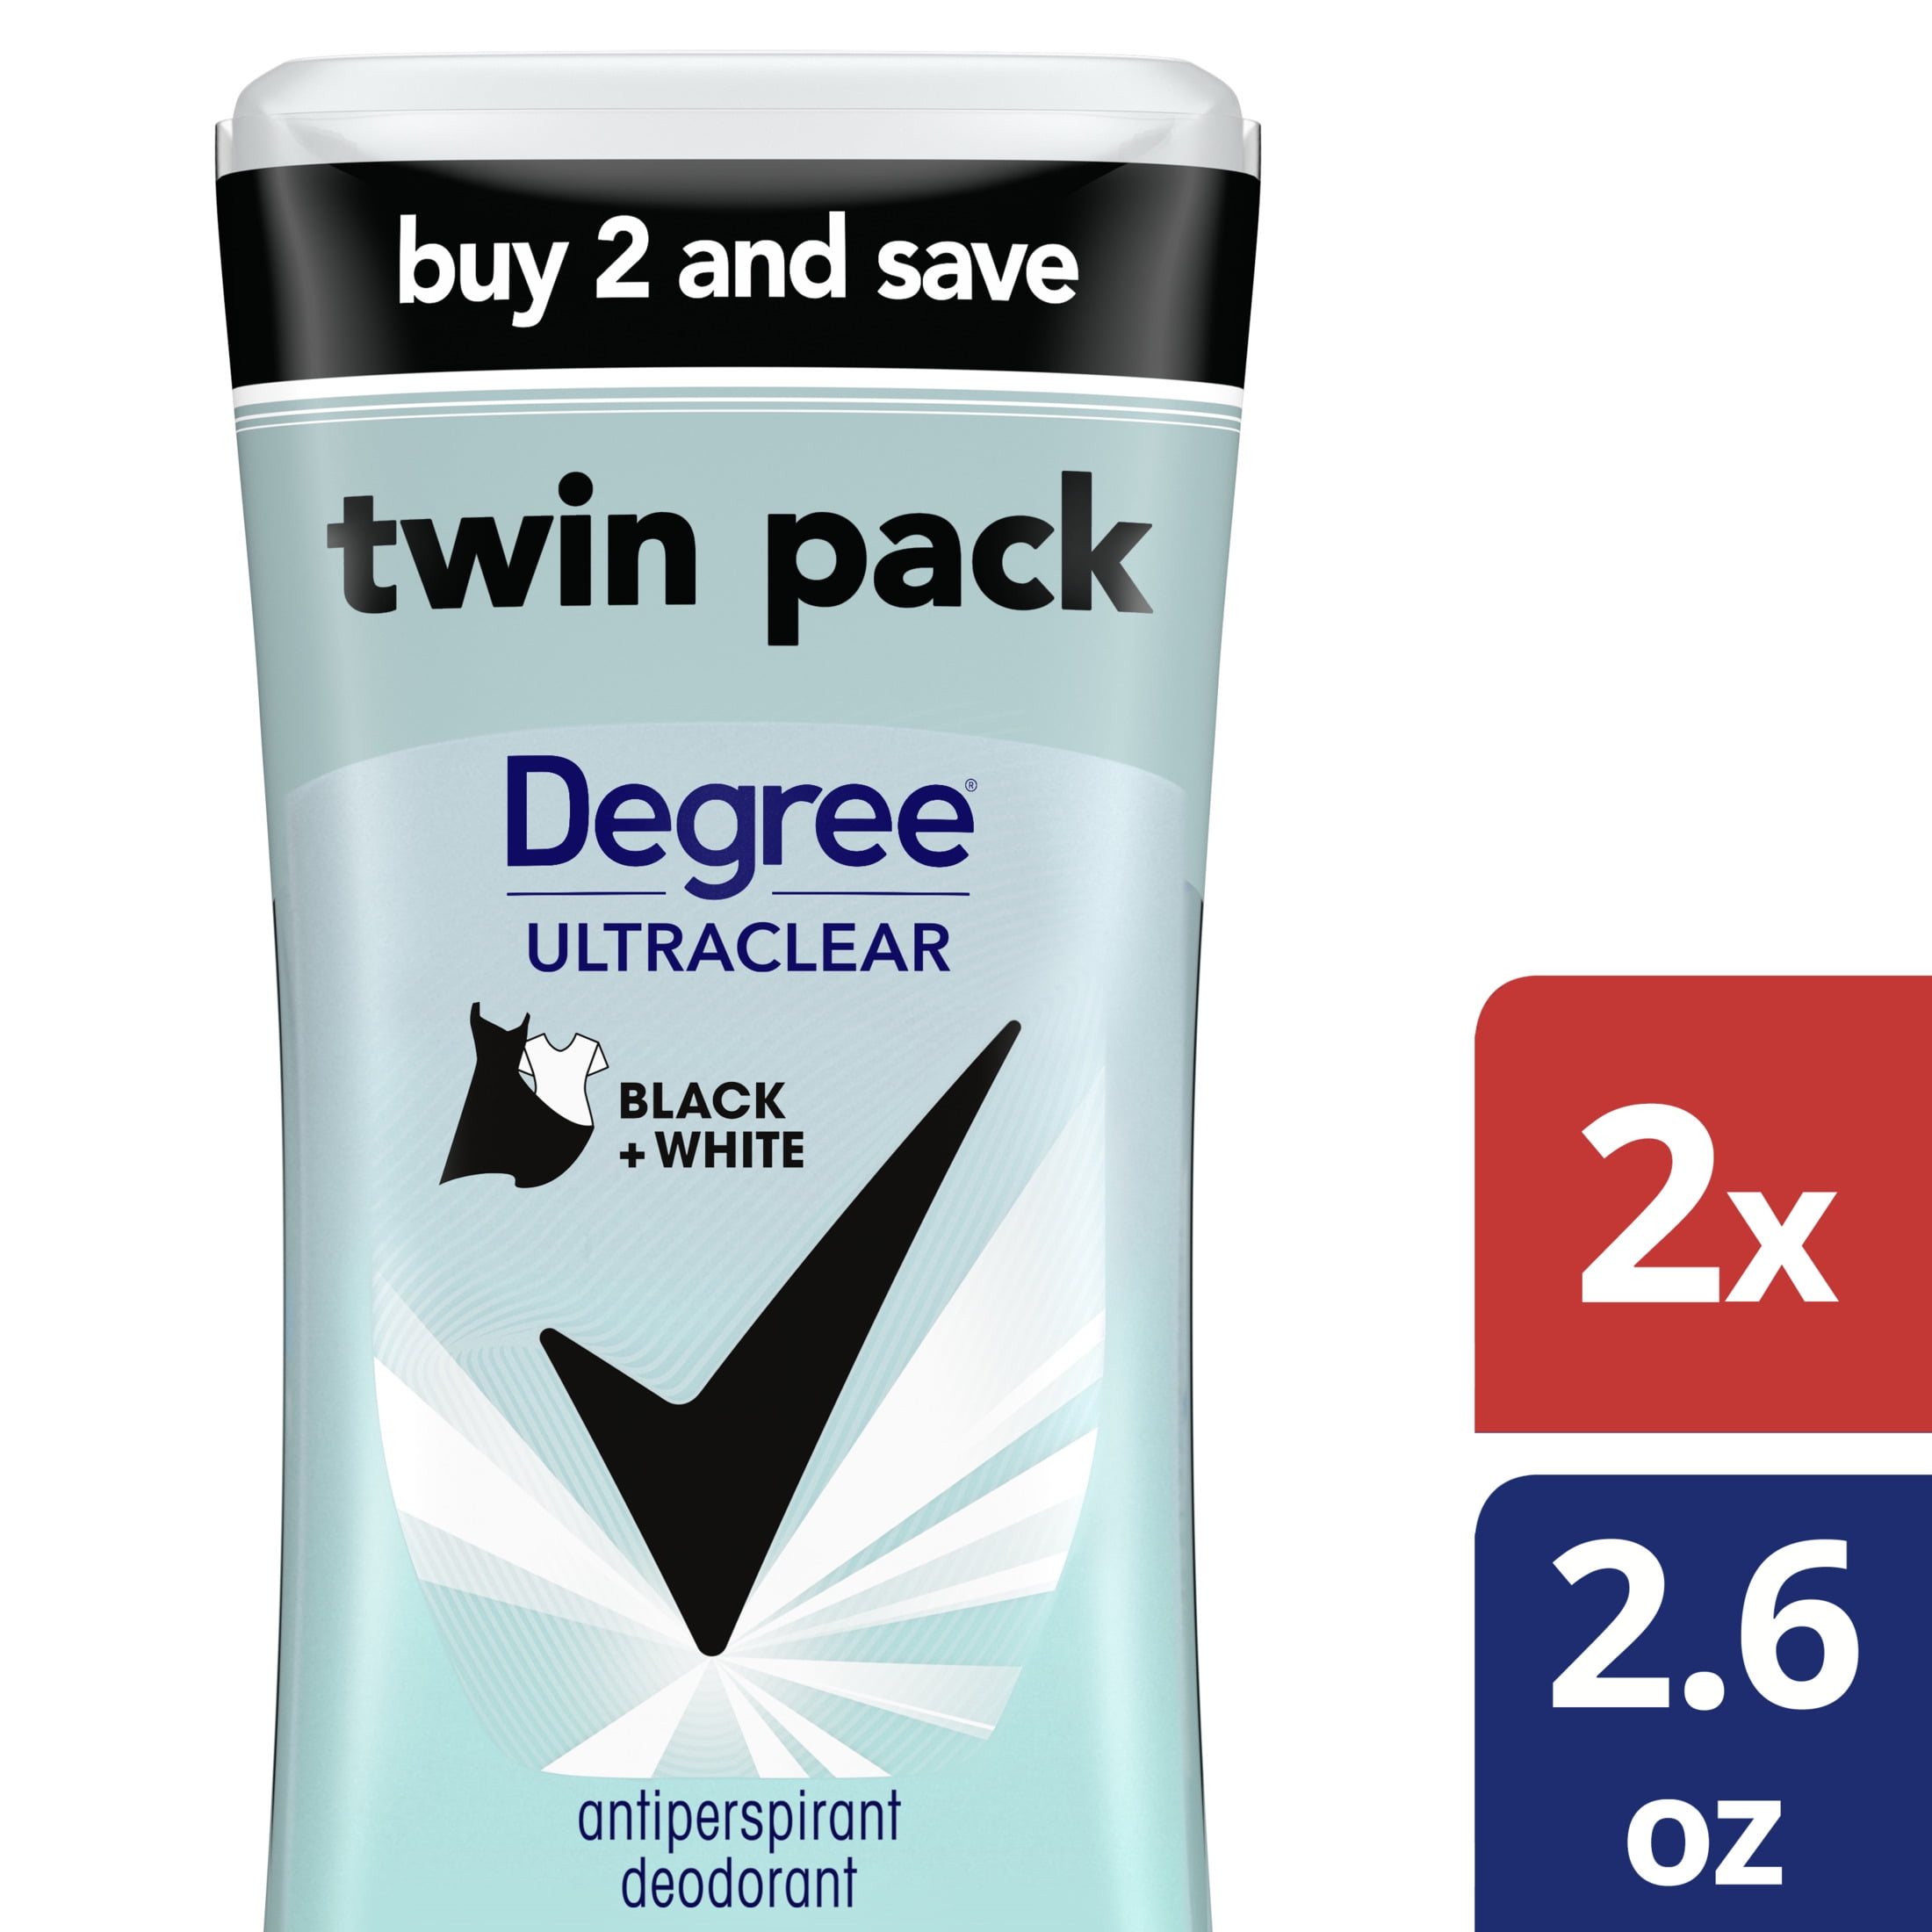 Degree Ultra Clear Black+White Antiperspirant Deodorant 2.6 oz Twin Pack